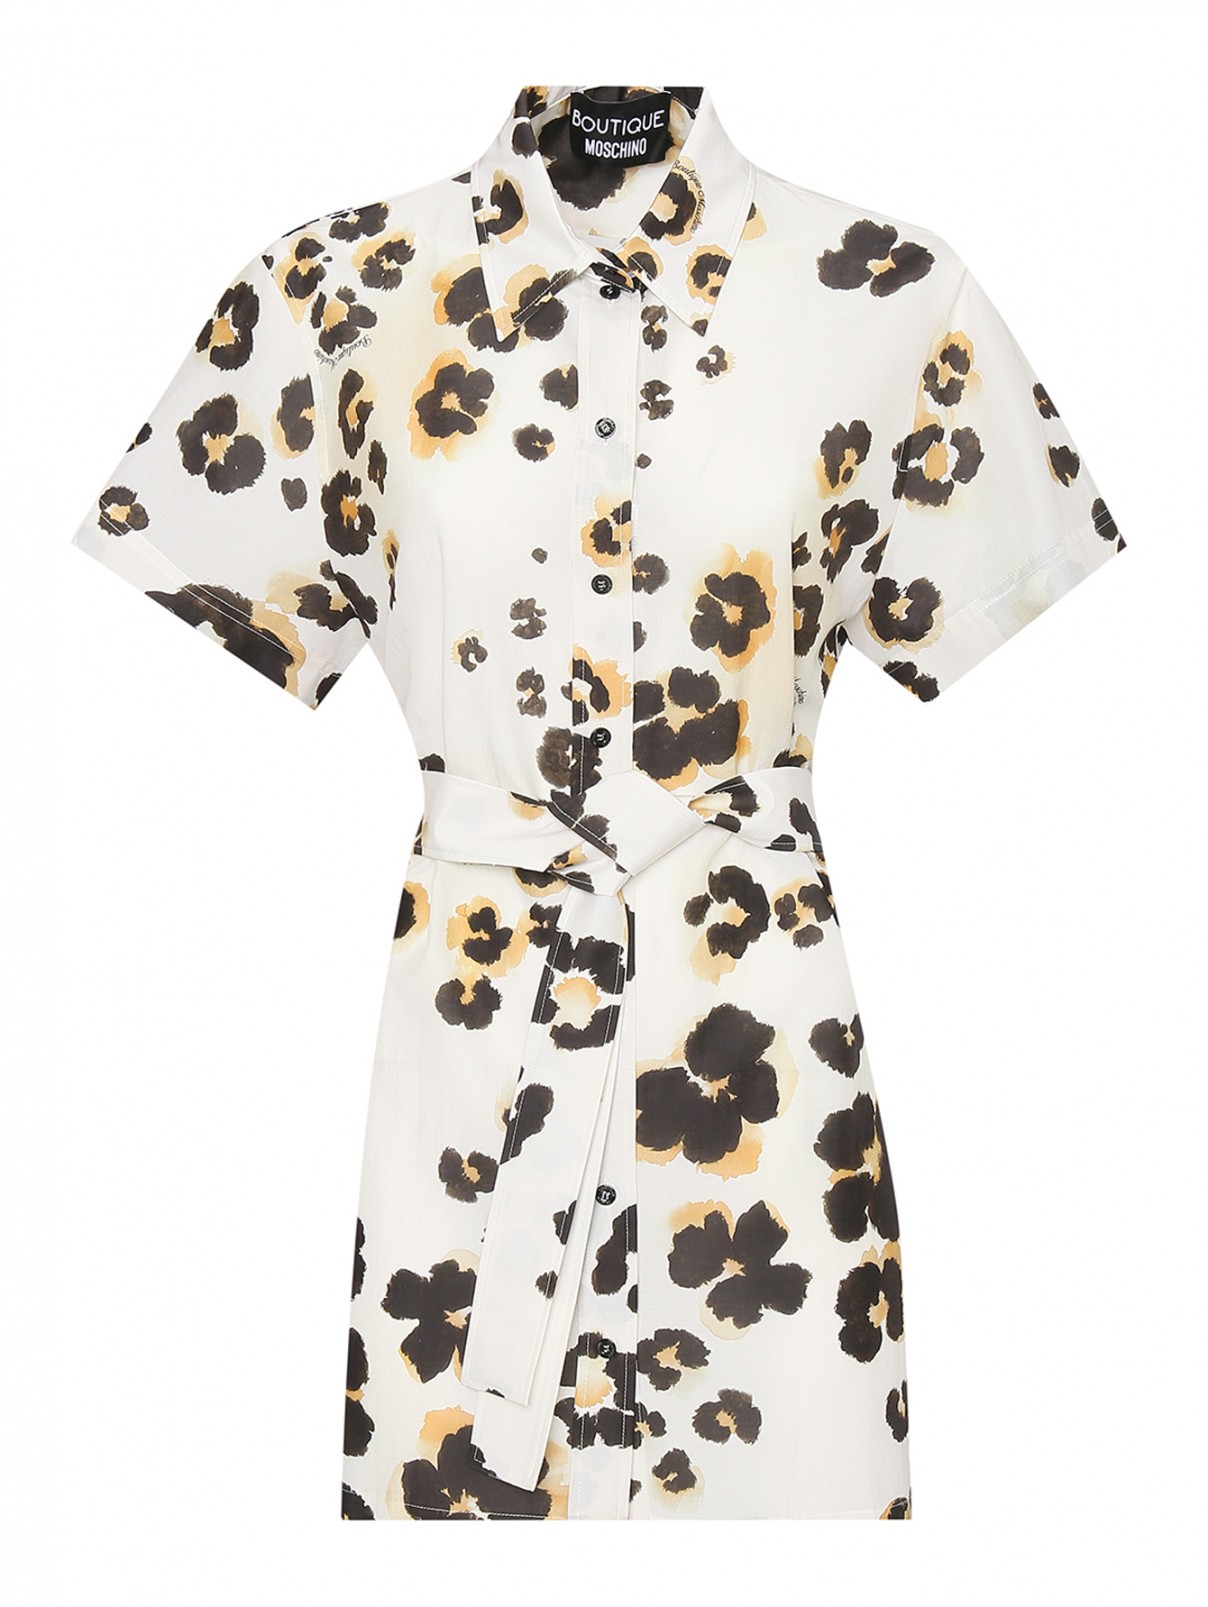 Рубашка из хлопка и шелка с узором Moschino Boutique  –  Общий вид  – Цвет:  Узор